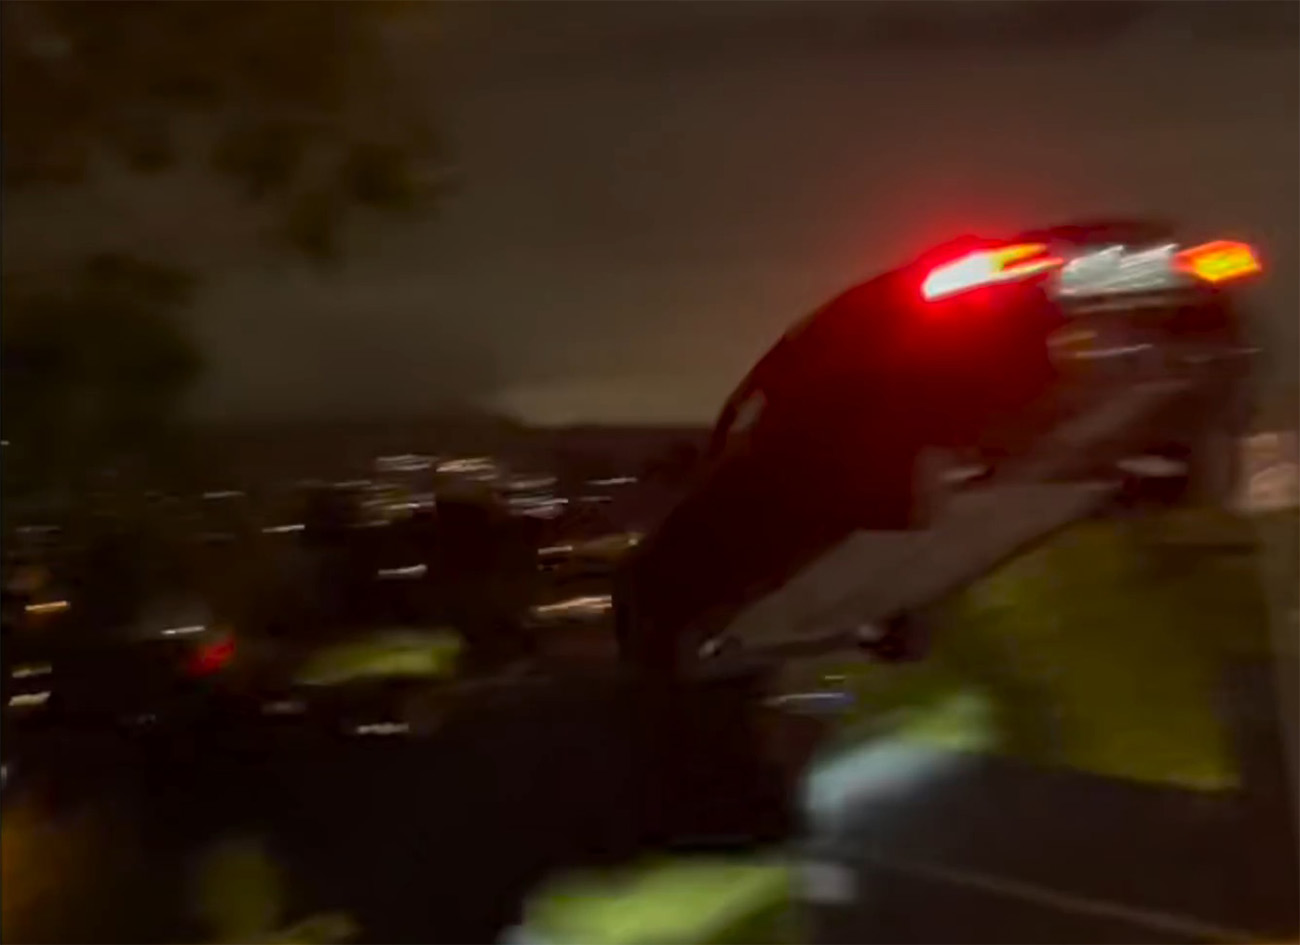 Tesla Model S Jumping in streets of LA sreenshot from Alex Choi video